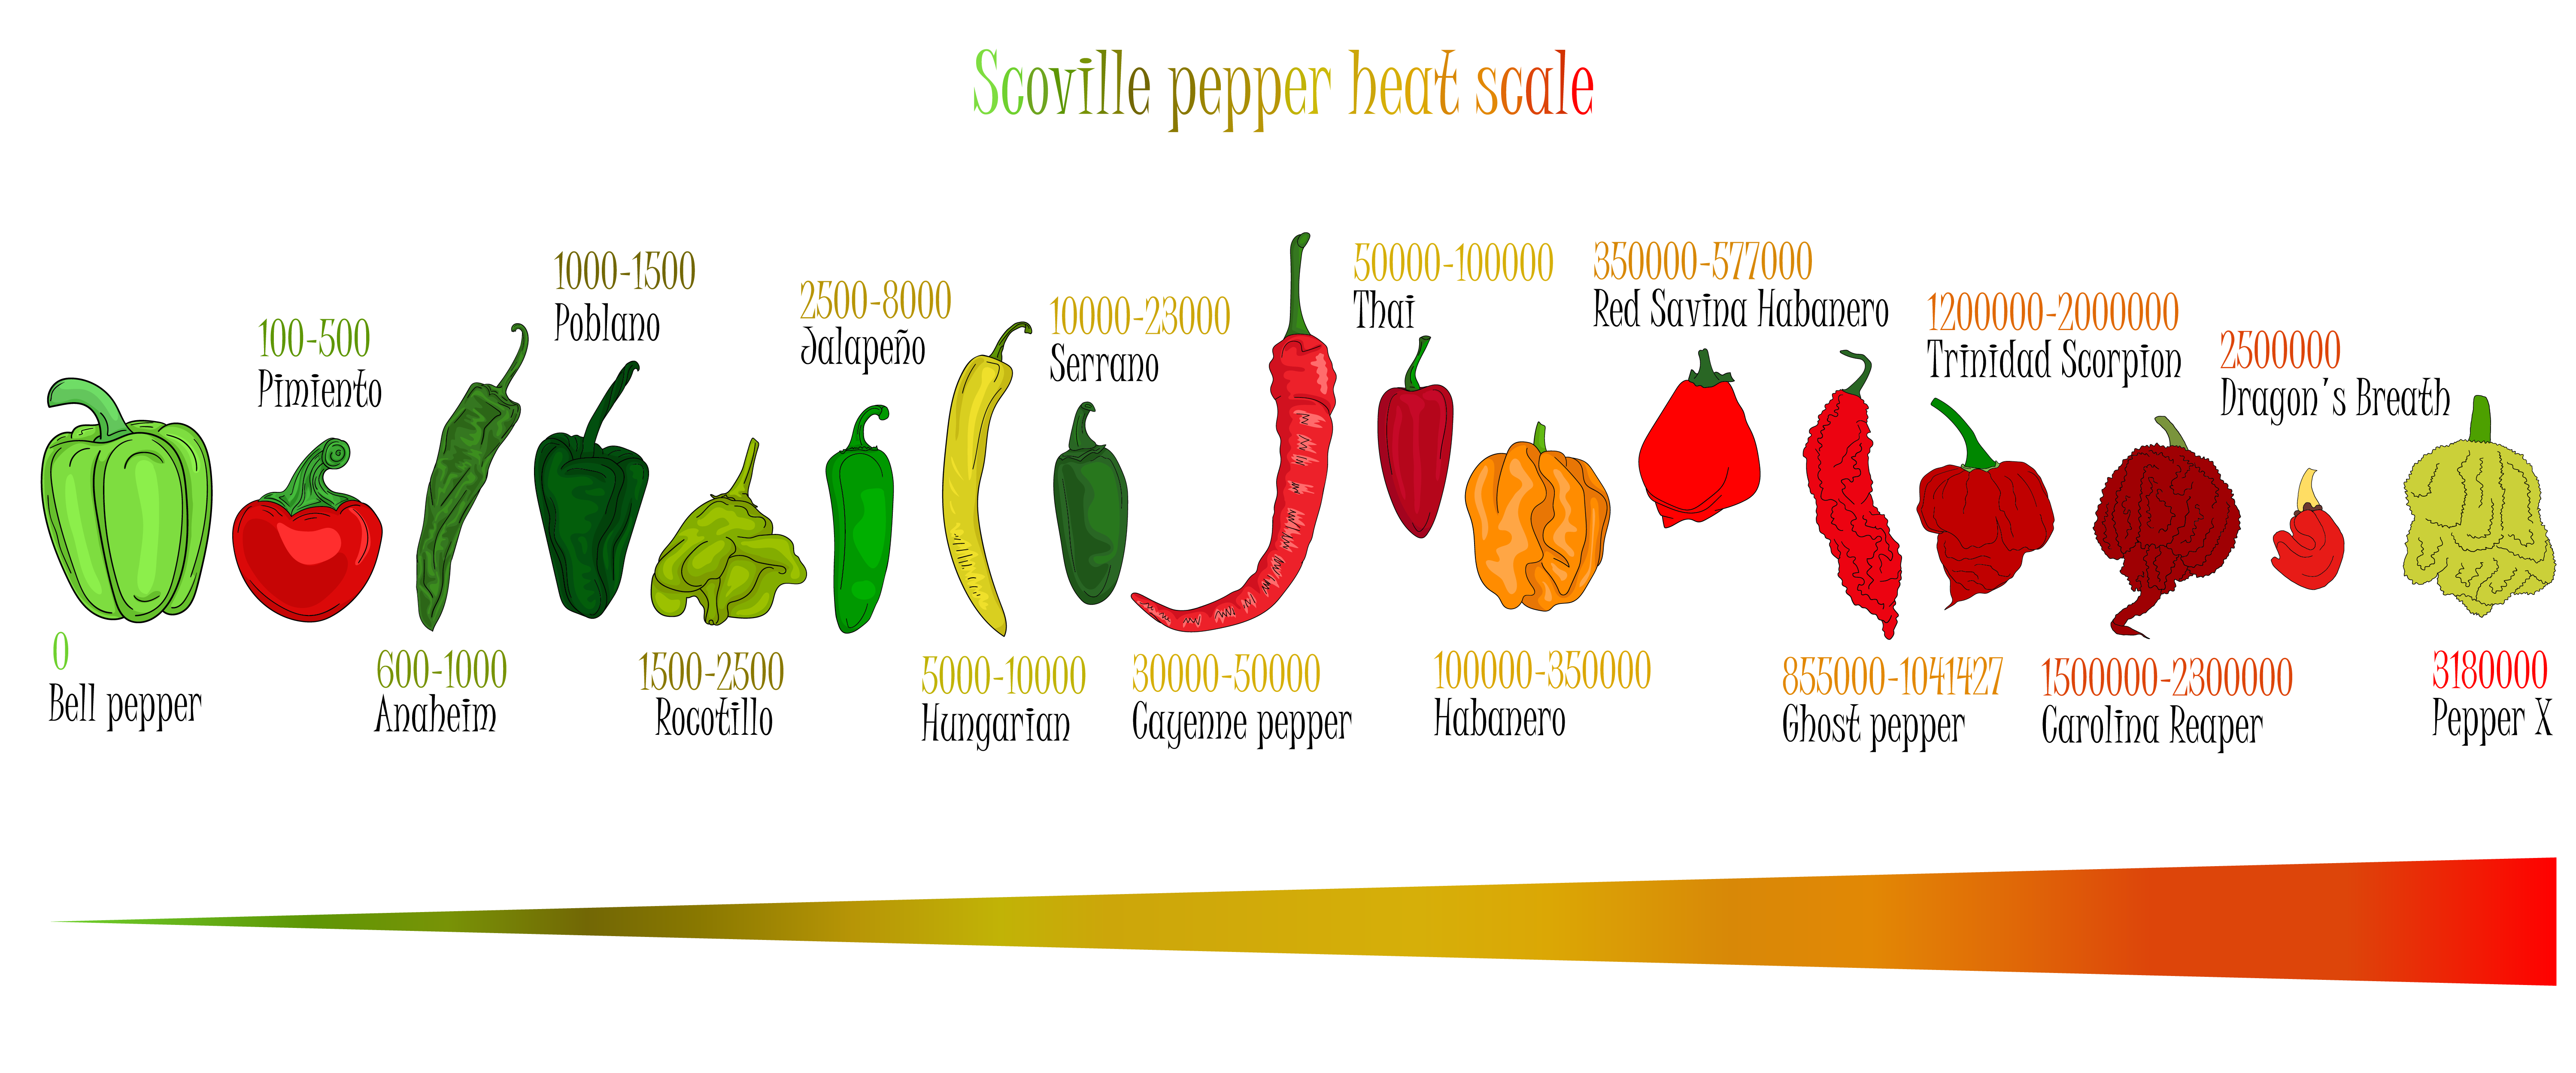 scoville scale peppers carolina reaper